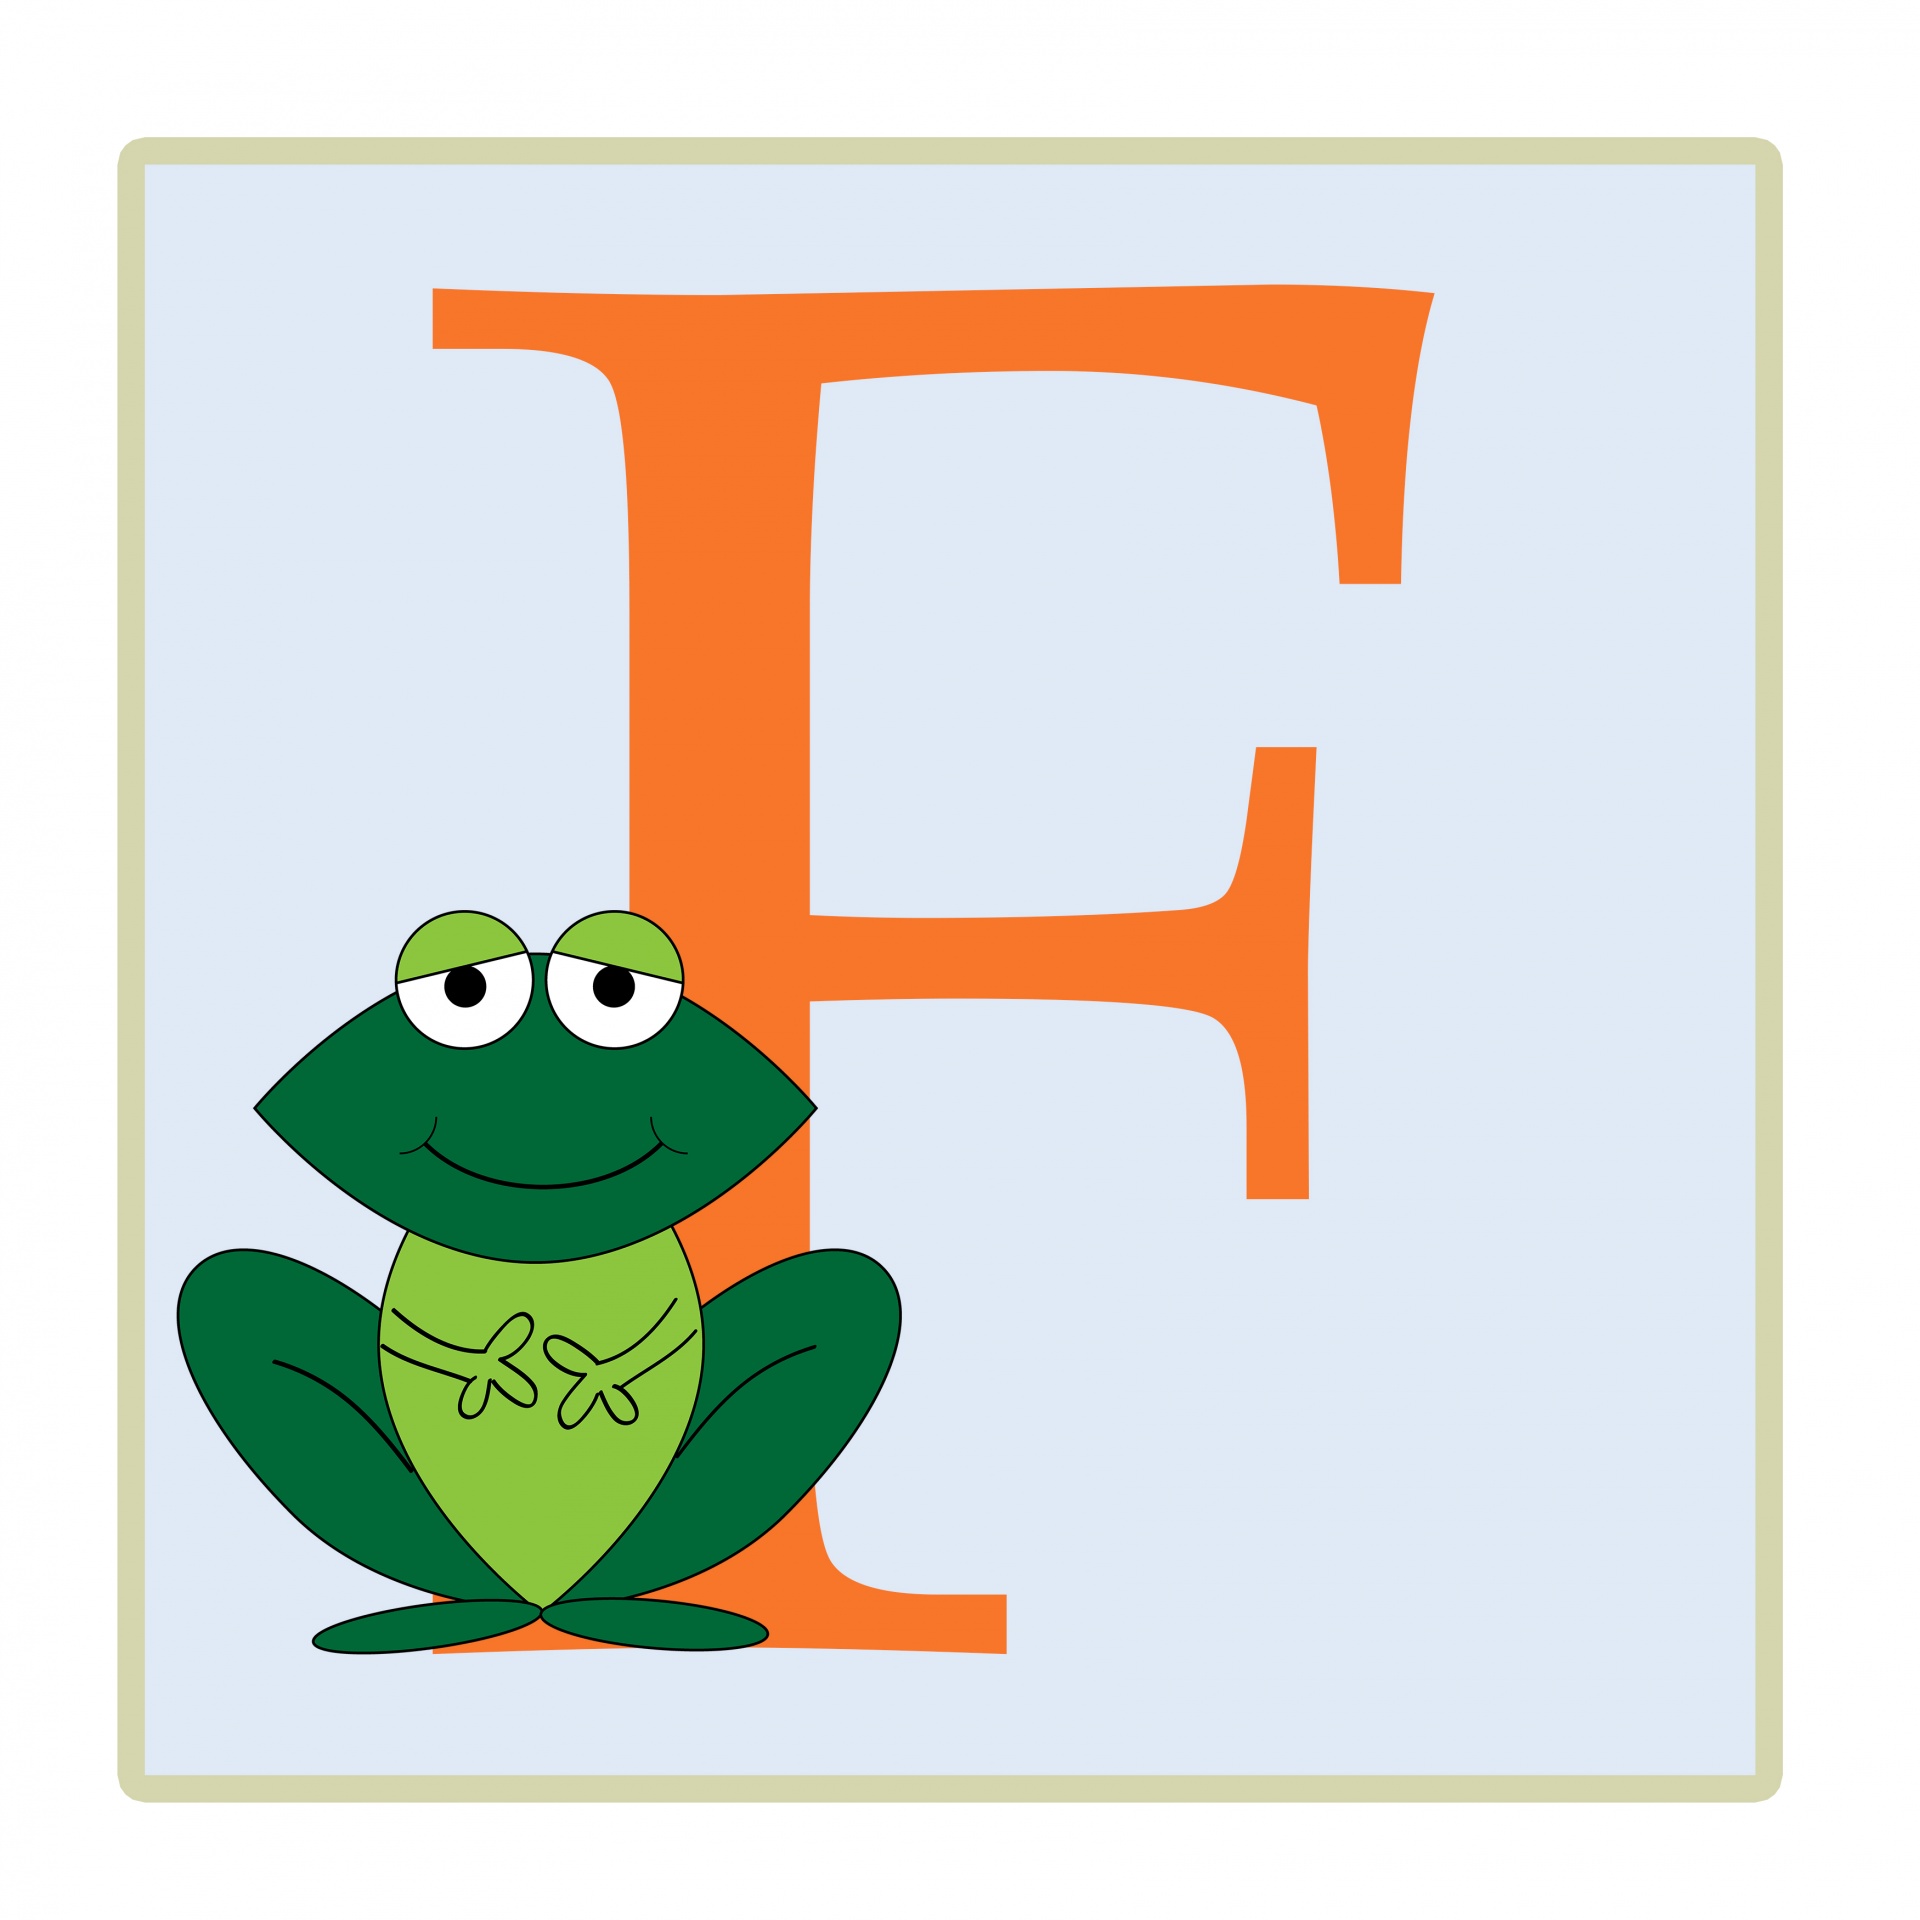  Letter F  Frog Illustration Free Stock Photo Public 